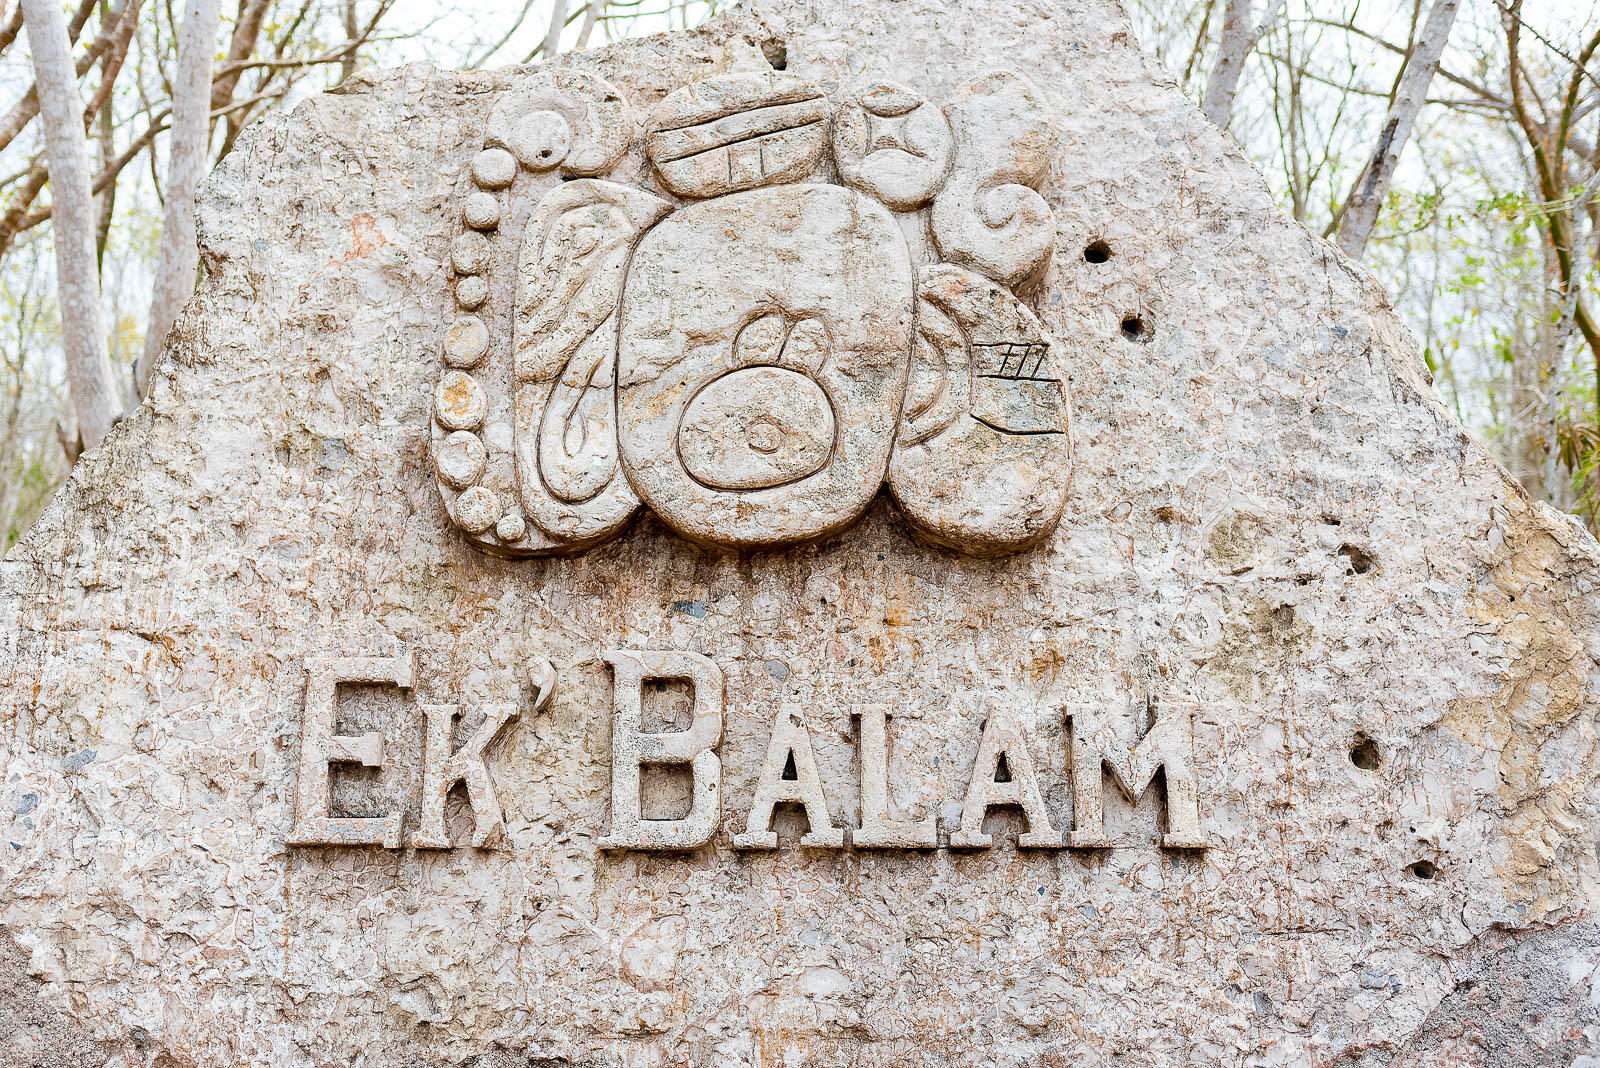 Ek Balam Mayan Archaeological Site and Mayan Cenote, Yucatán Mexico